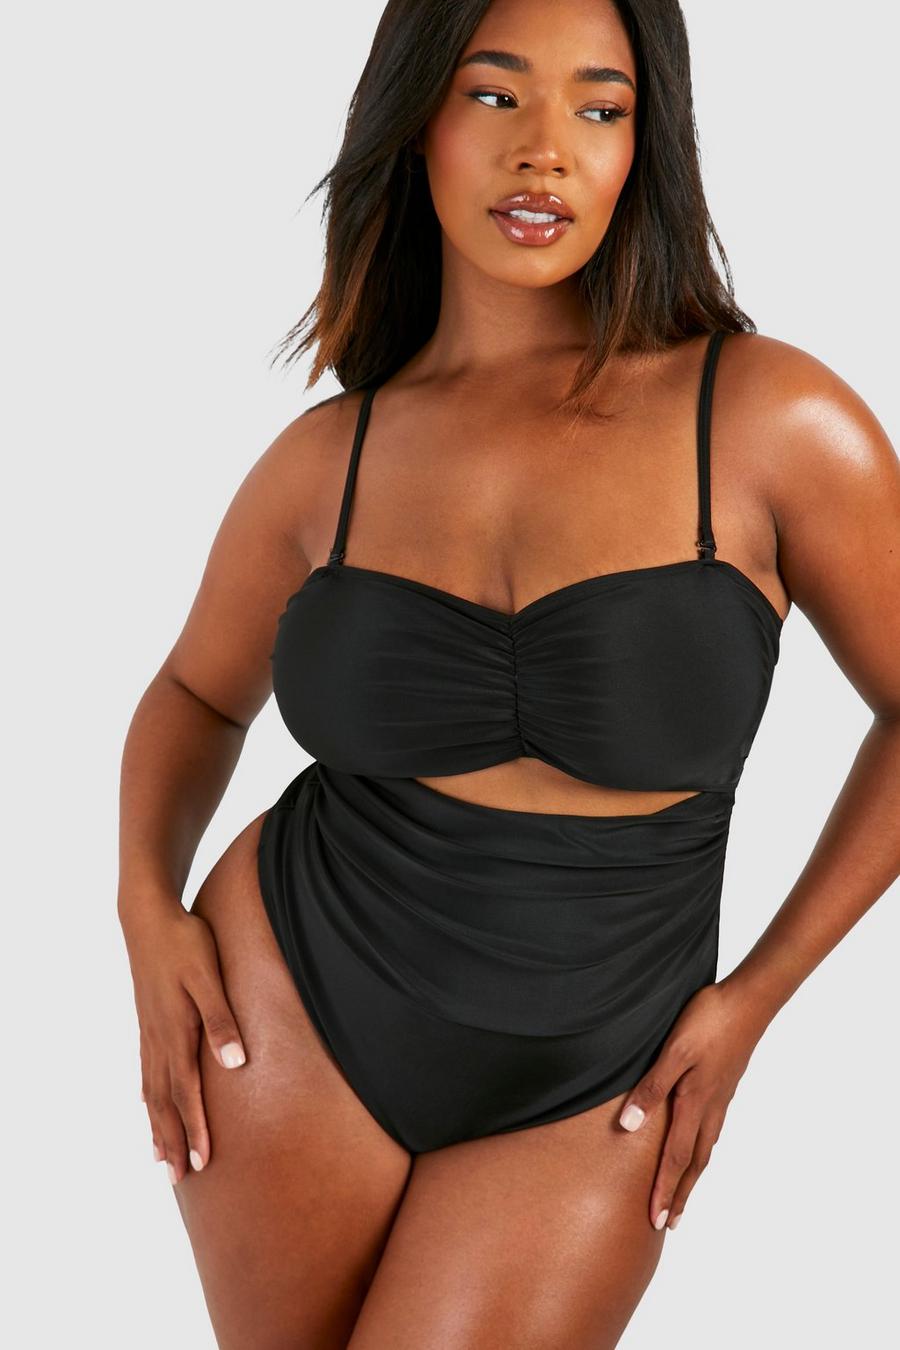 EHQJNJ Plus Size Swimsuit for Women 1 Piece Bikini Top Women Shapewear  Underwear High Waist Seamless Bodysuit Push up Bikini Set